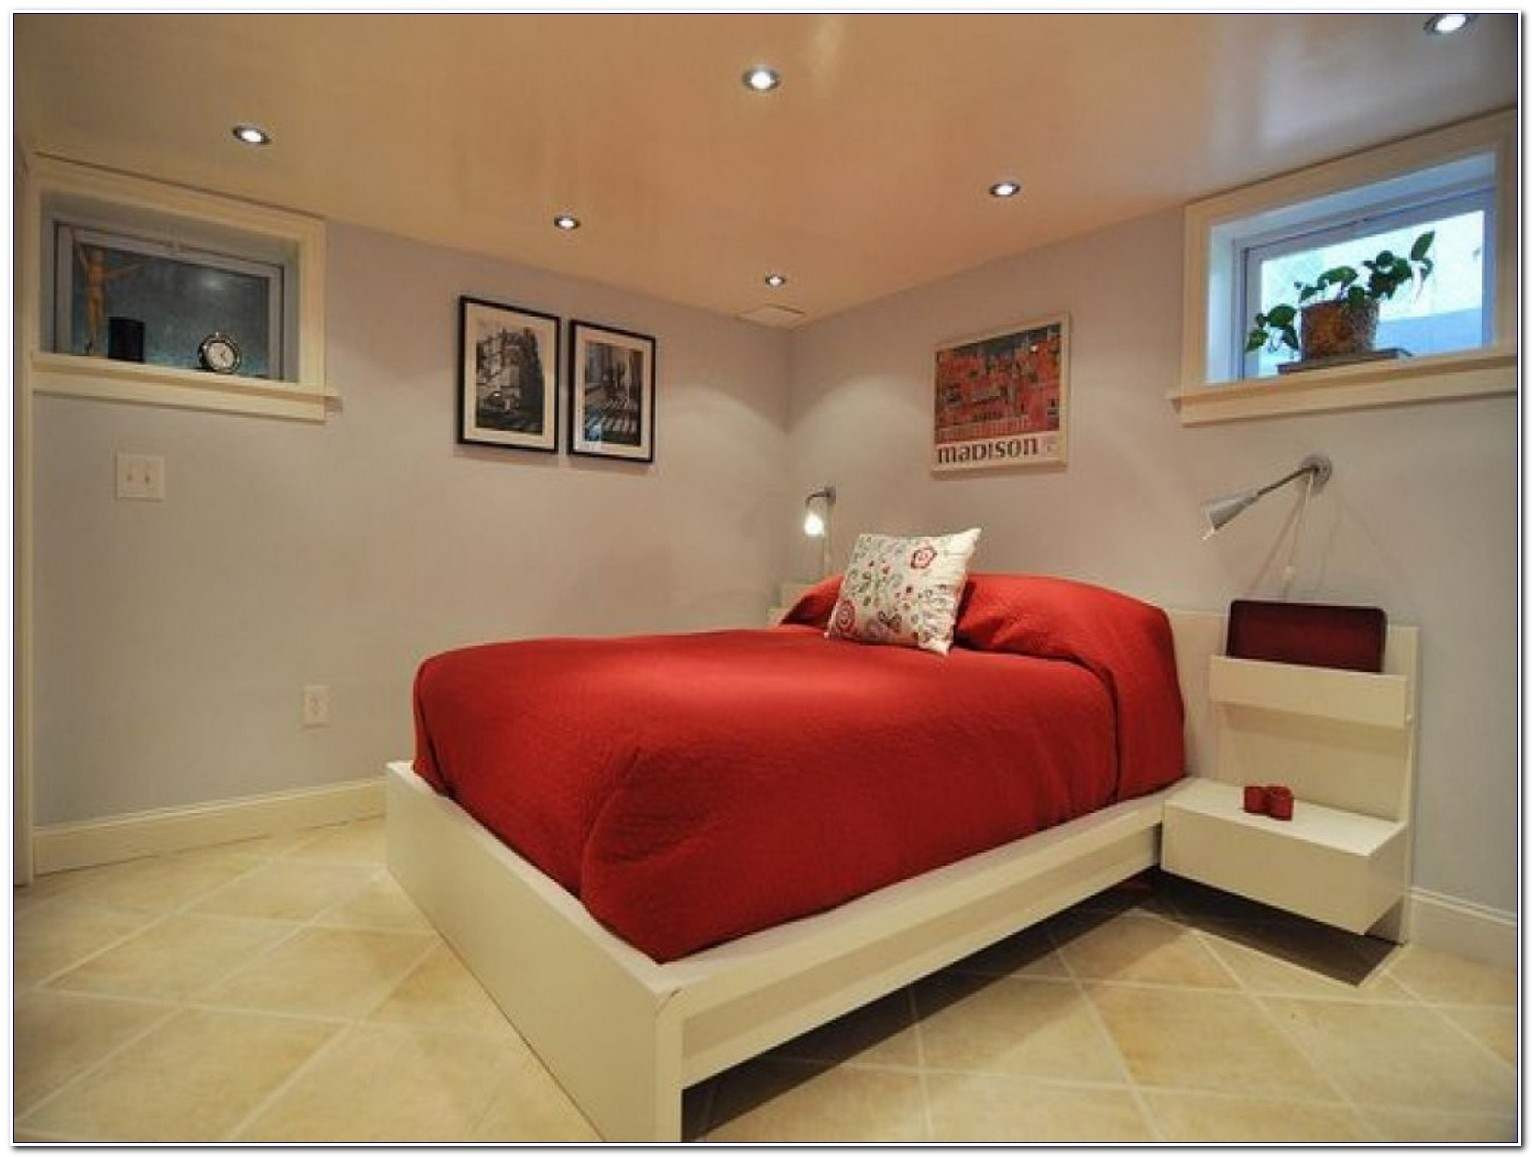 Bedroom Recessed Lighting
 Adding Recessed Lighting To Bedroom – Bedroom Ideas